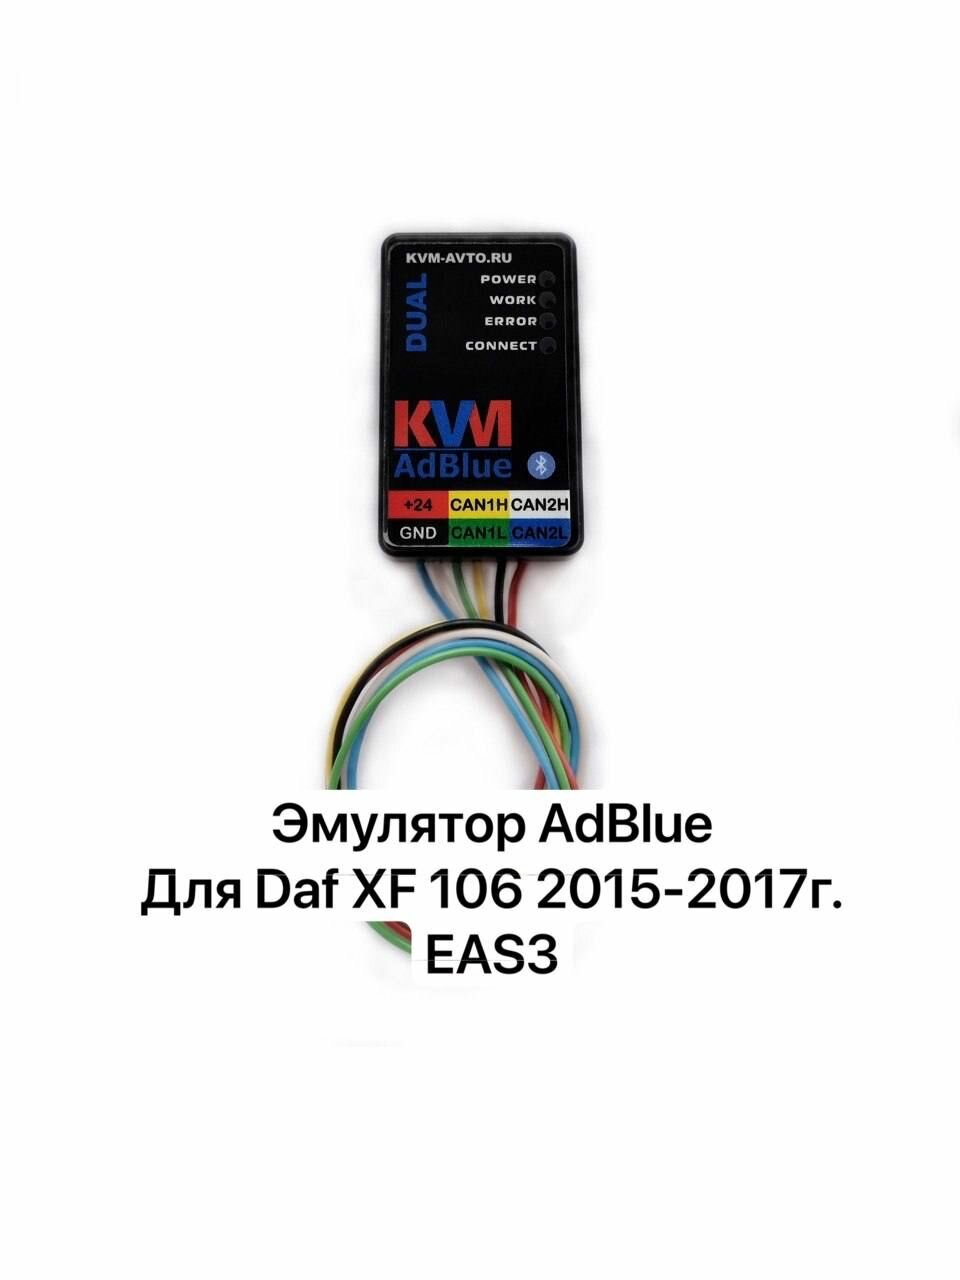 Эмулятор AdBlue для Daf XF106 2015-2017 г. EAS-3, евро 6, герметичный